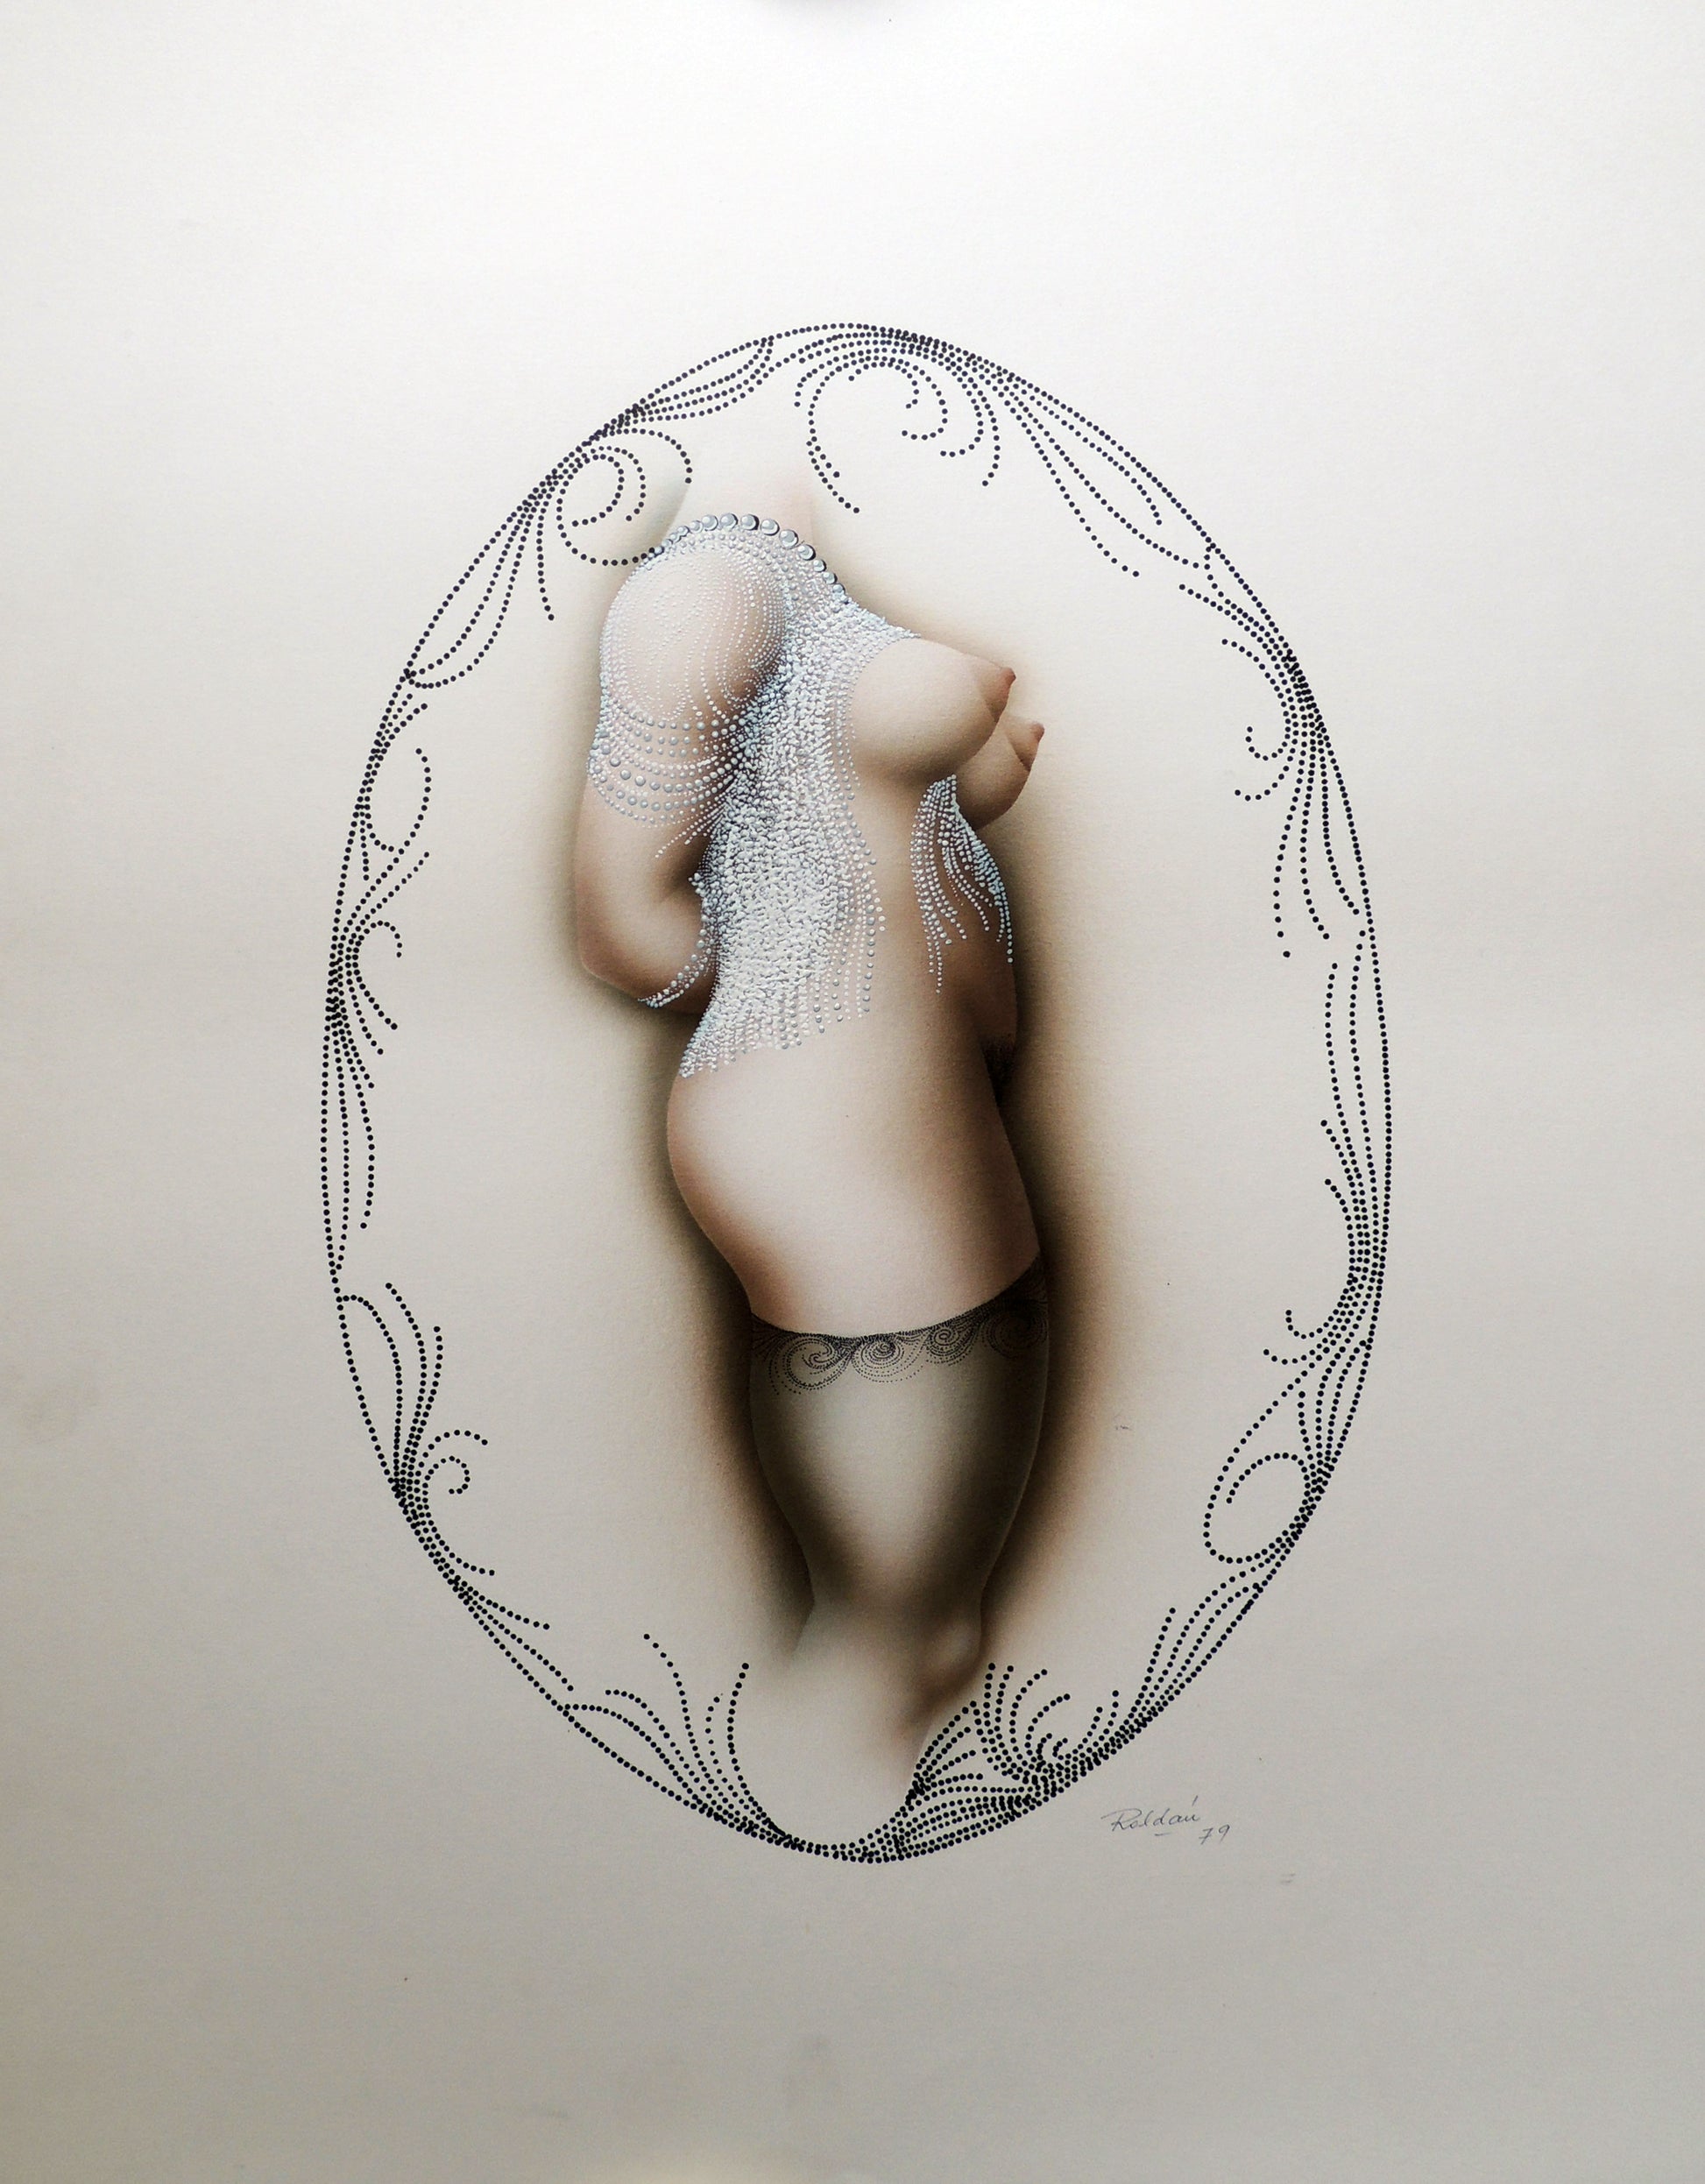 Modesto Roldán dibujo desnudo surrealista Gaudifond